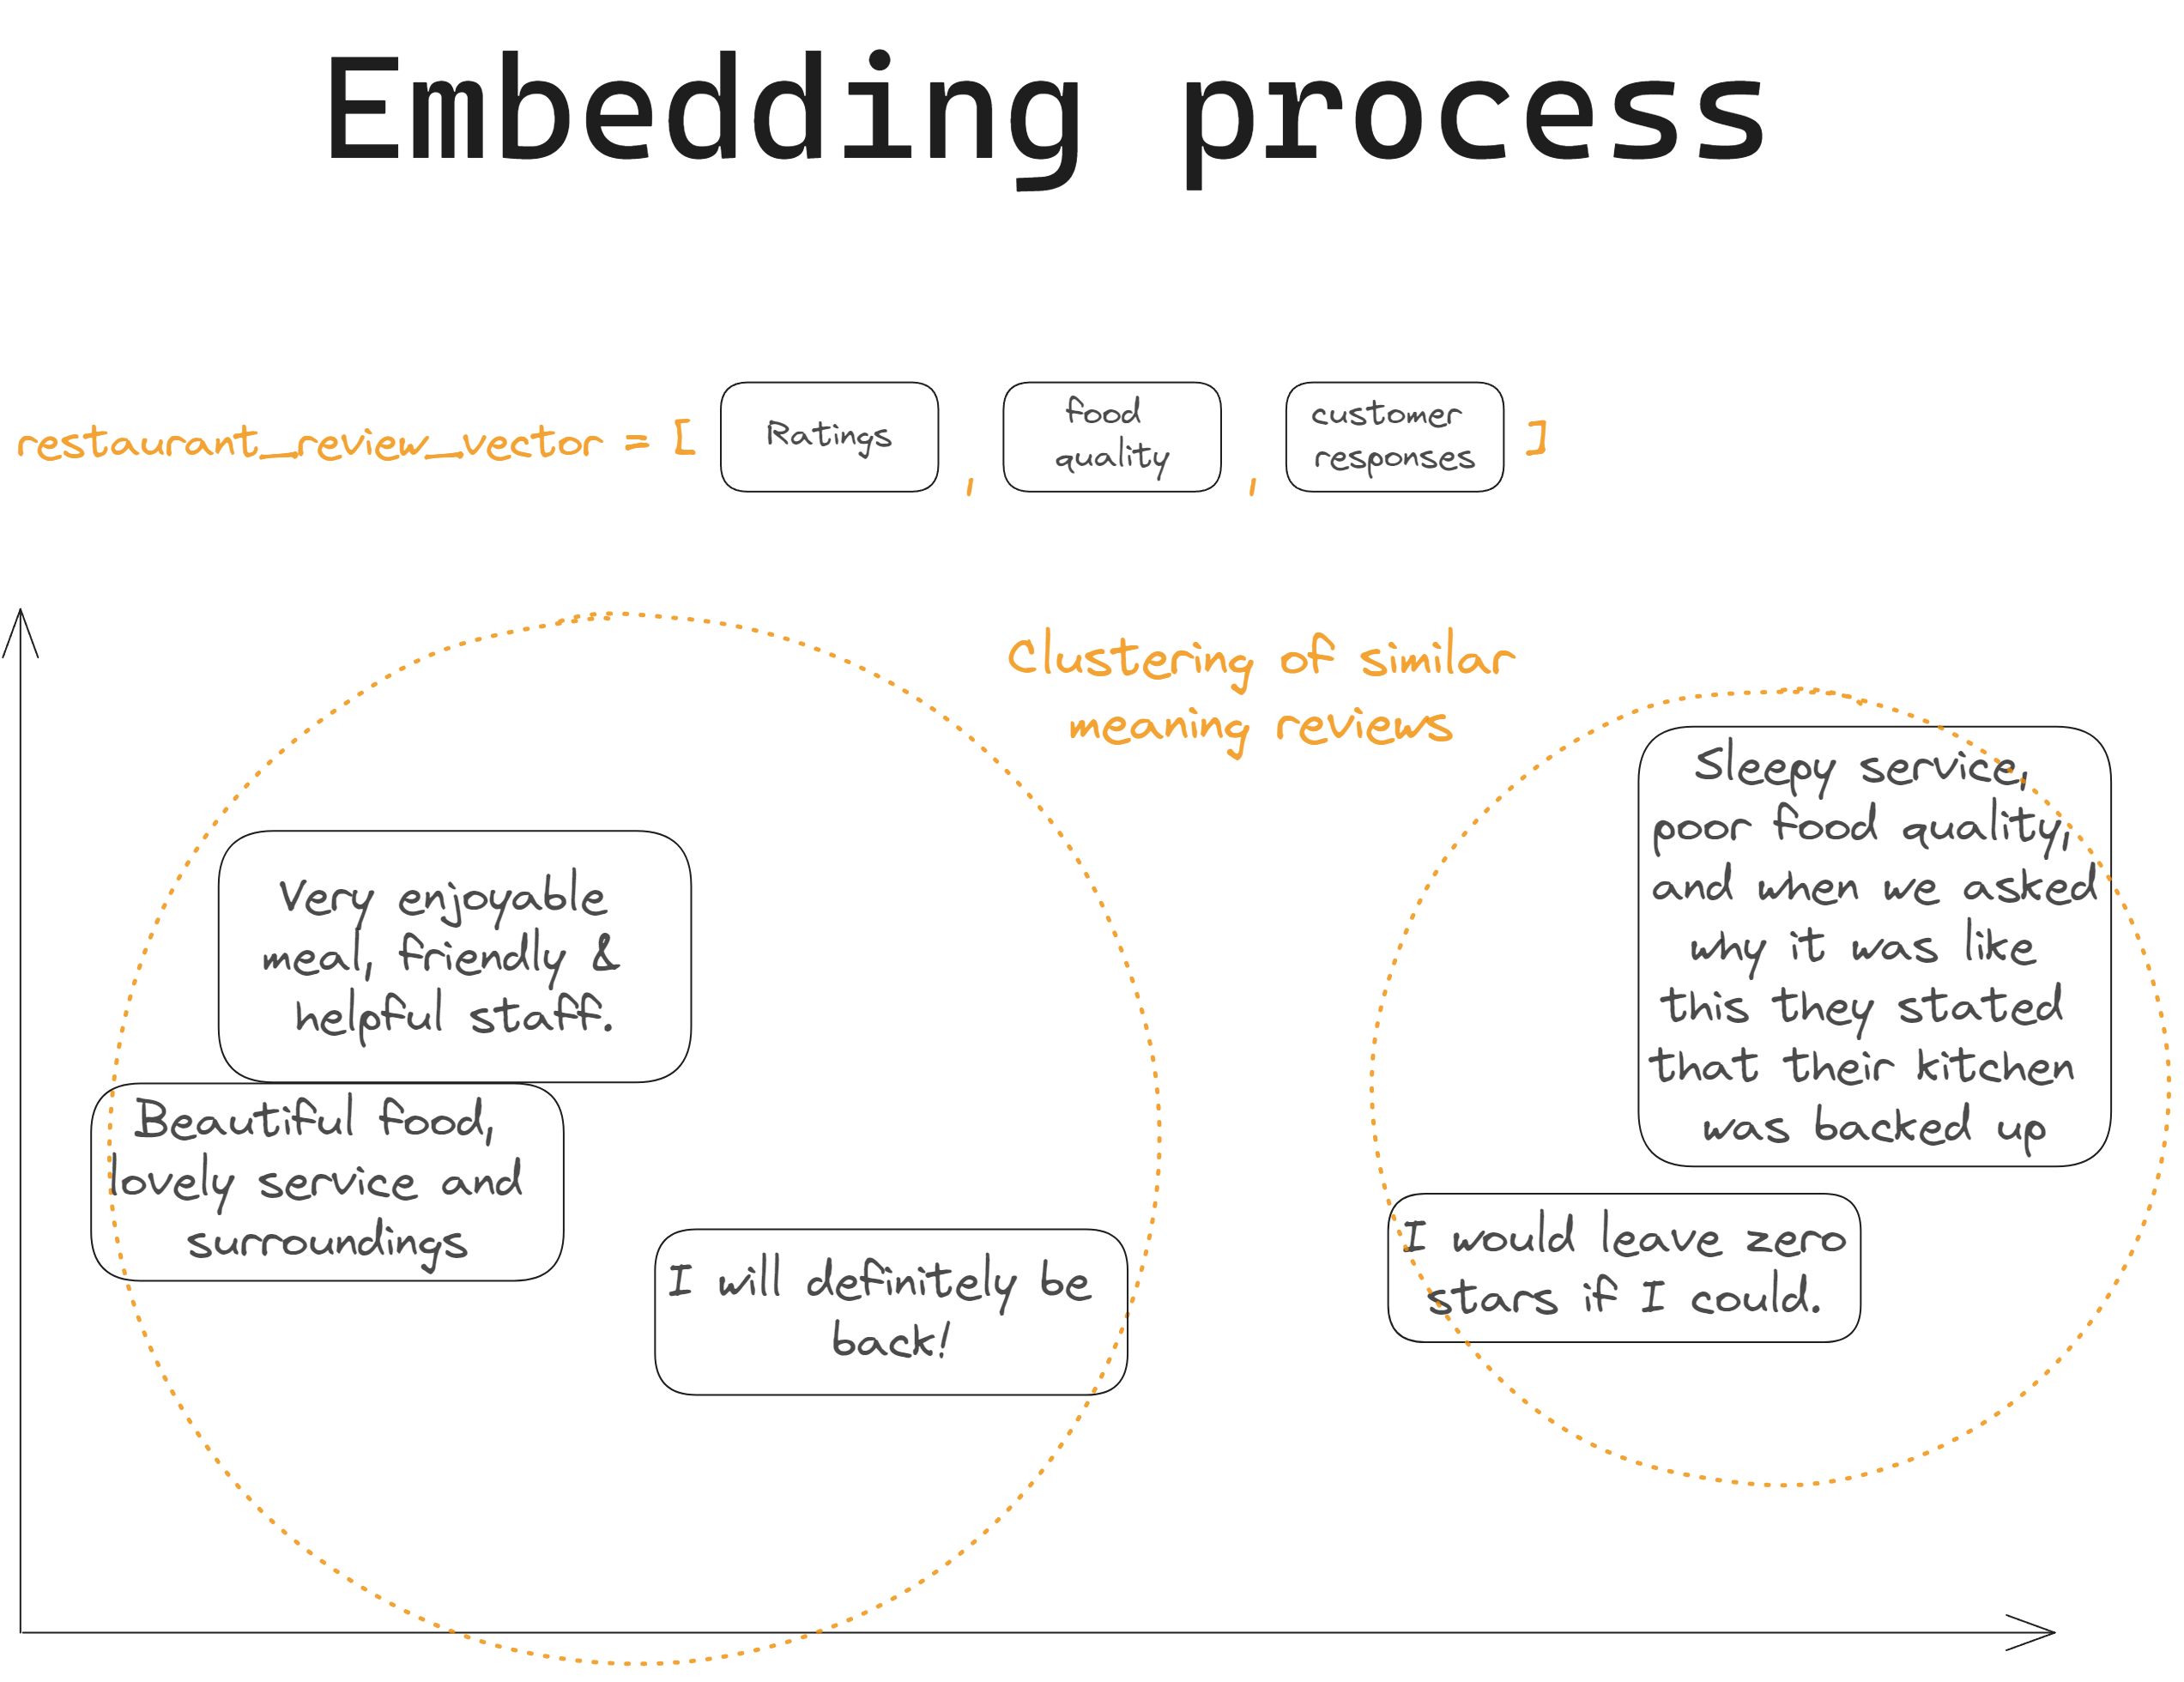 Embedding process